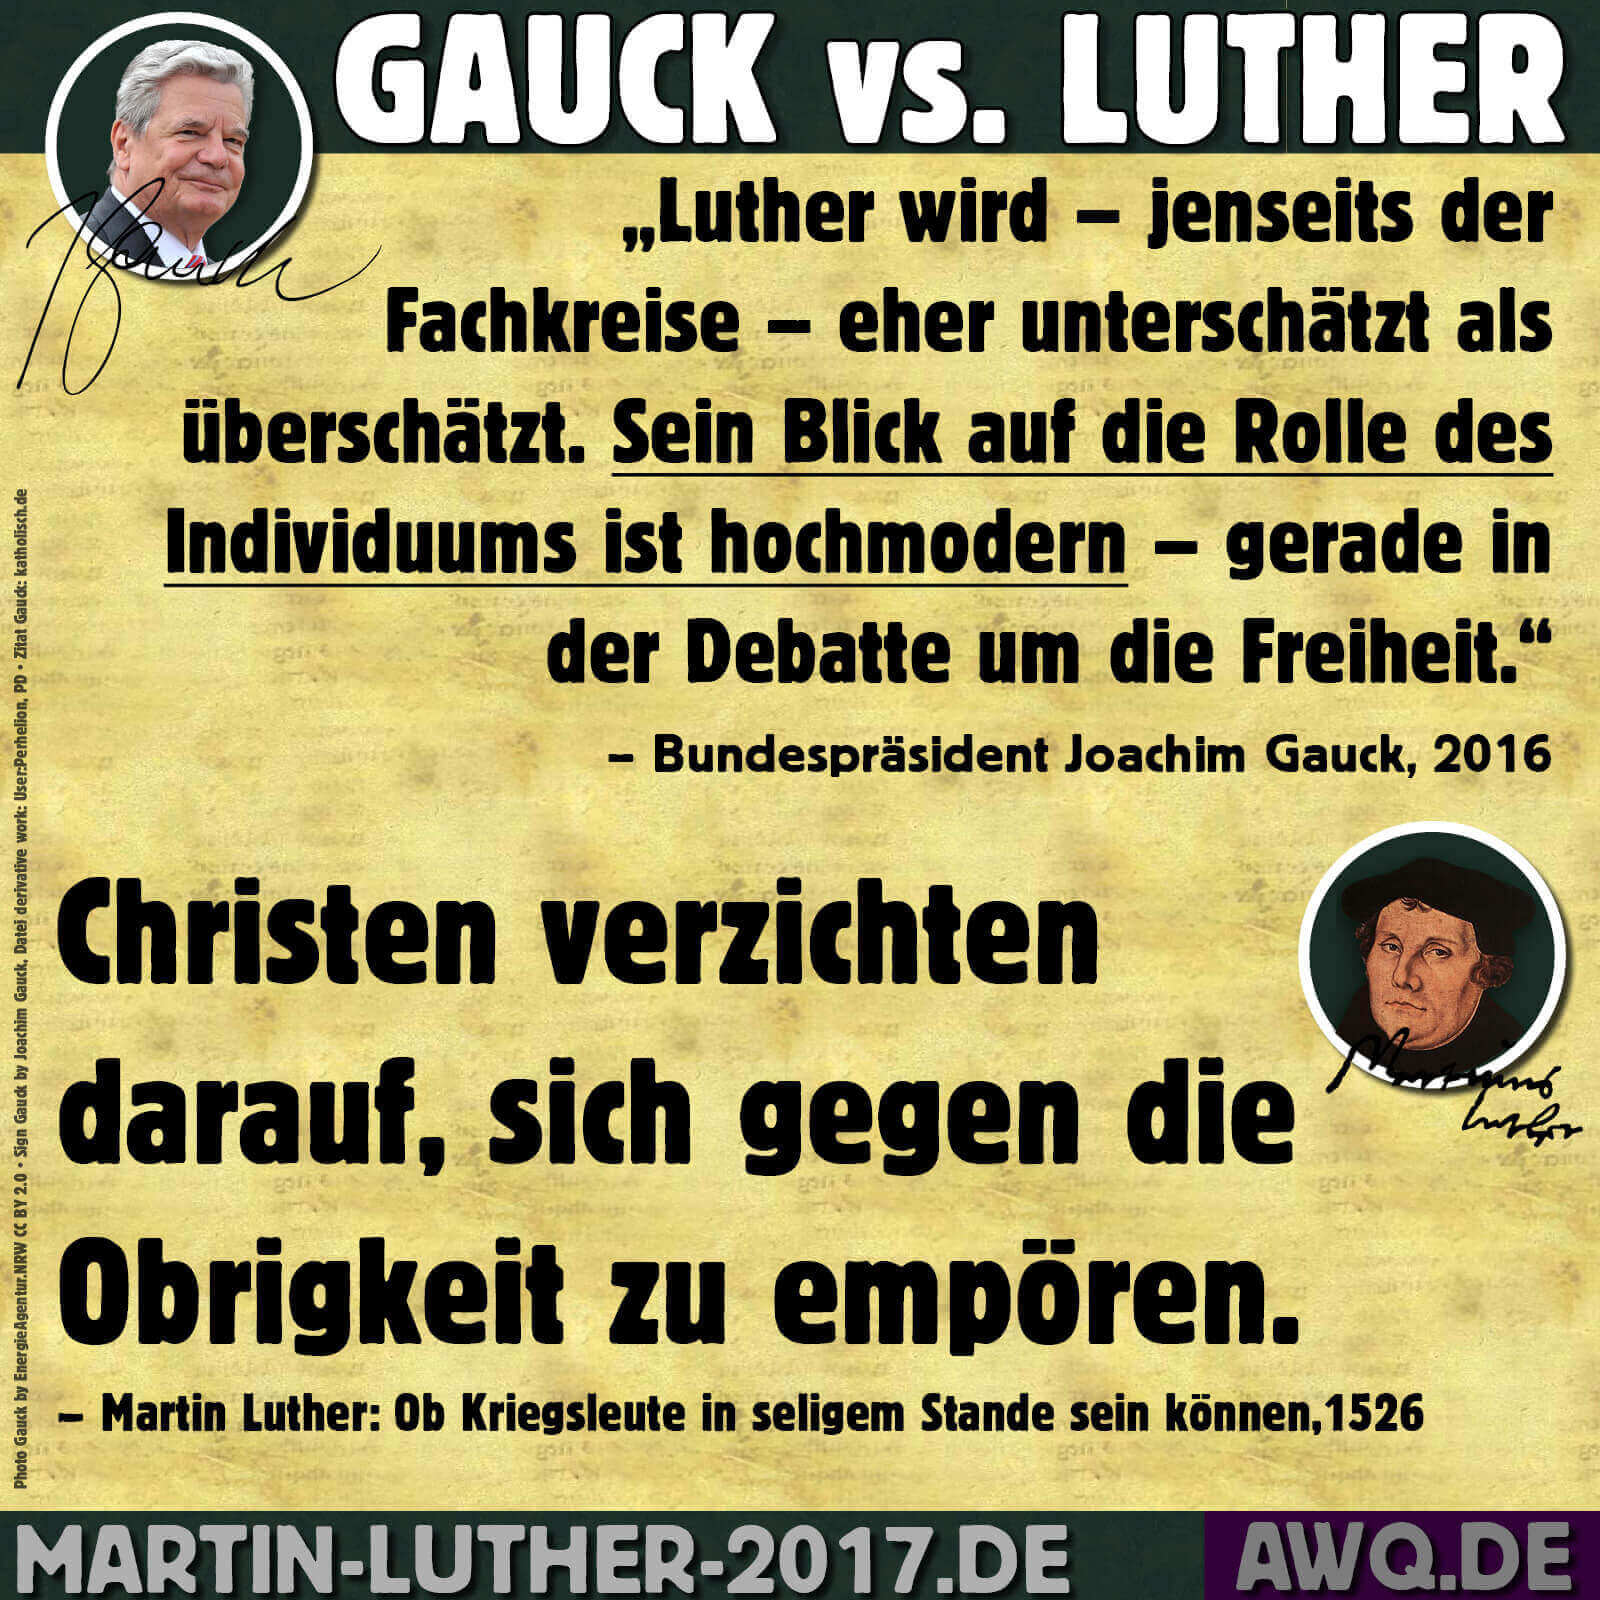 AWQ Meme Gauck vs. Luther